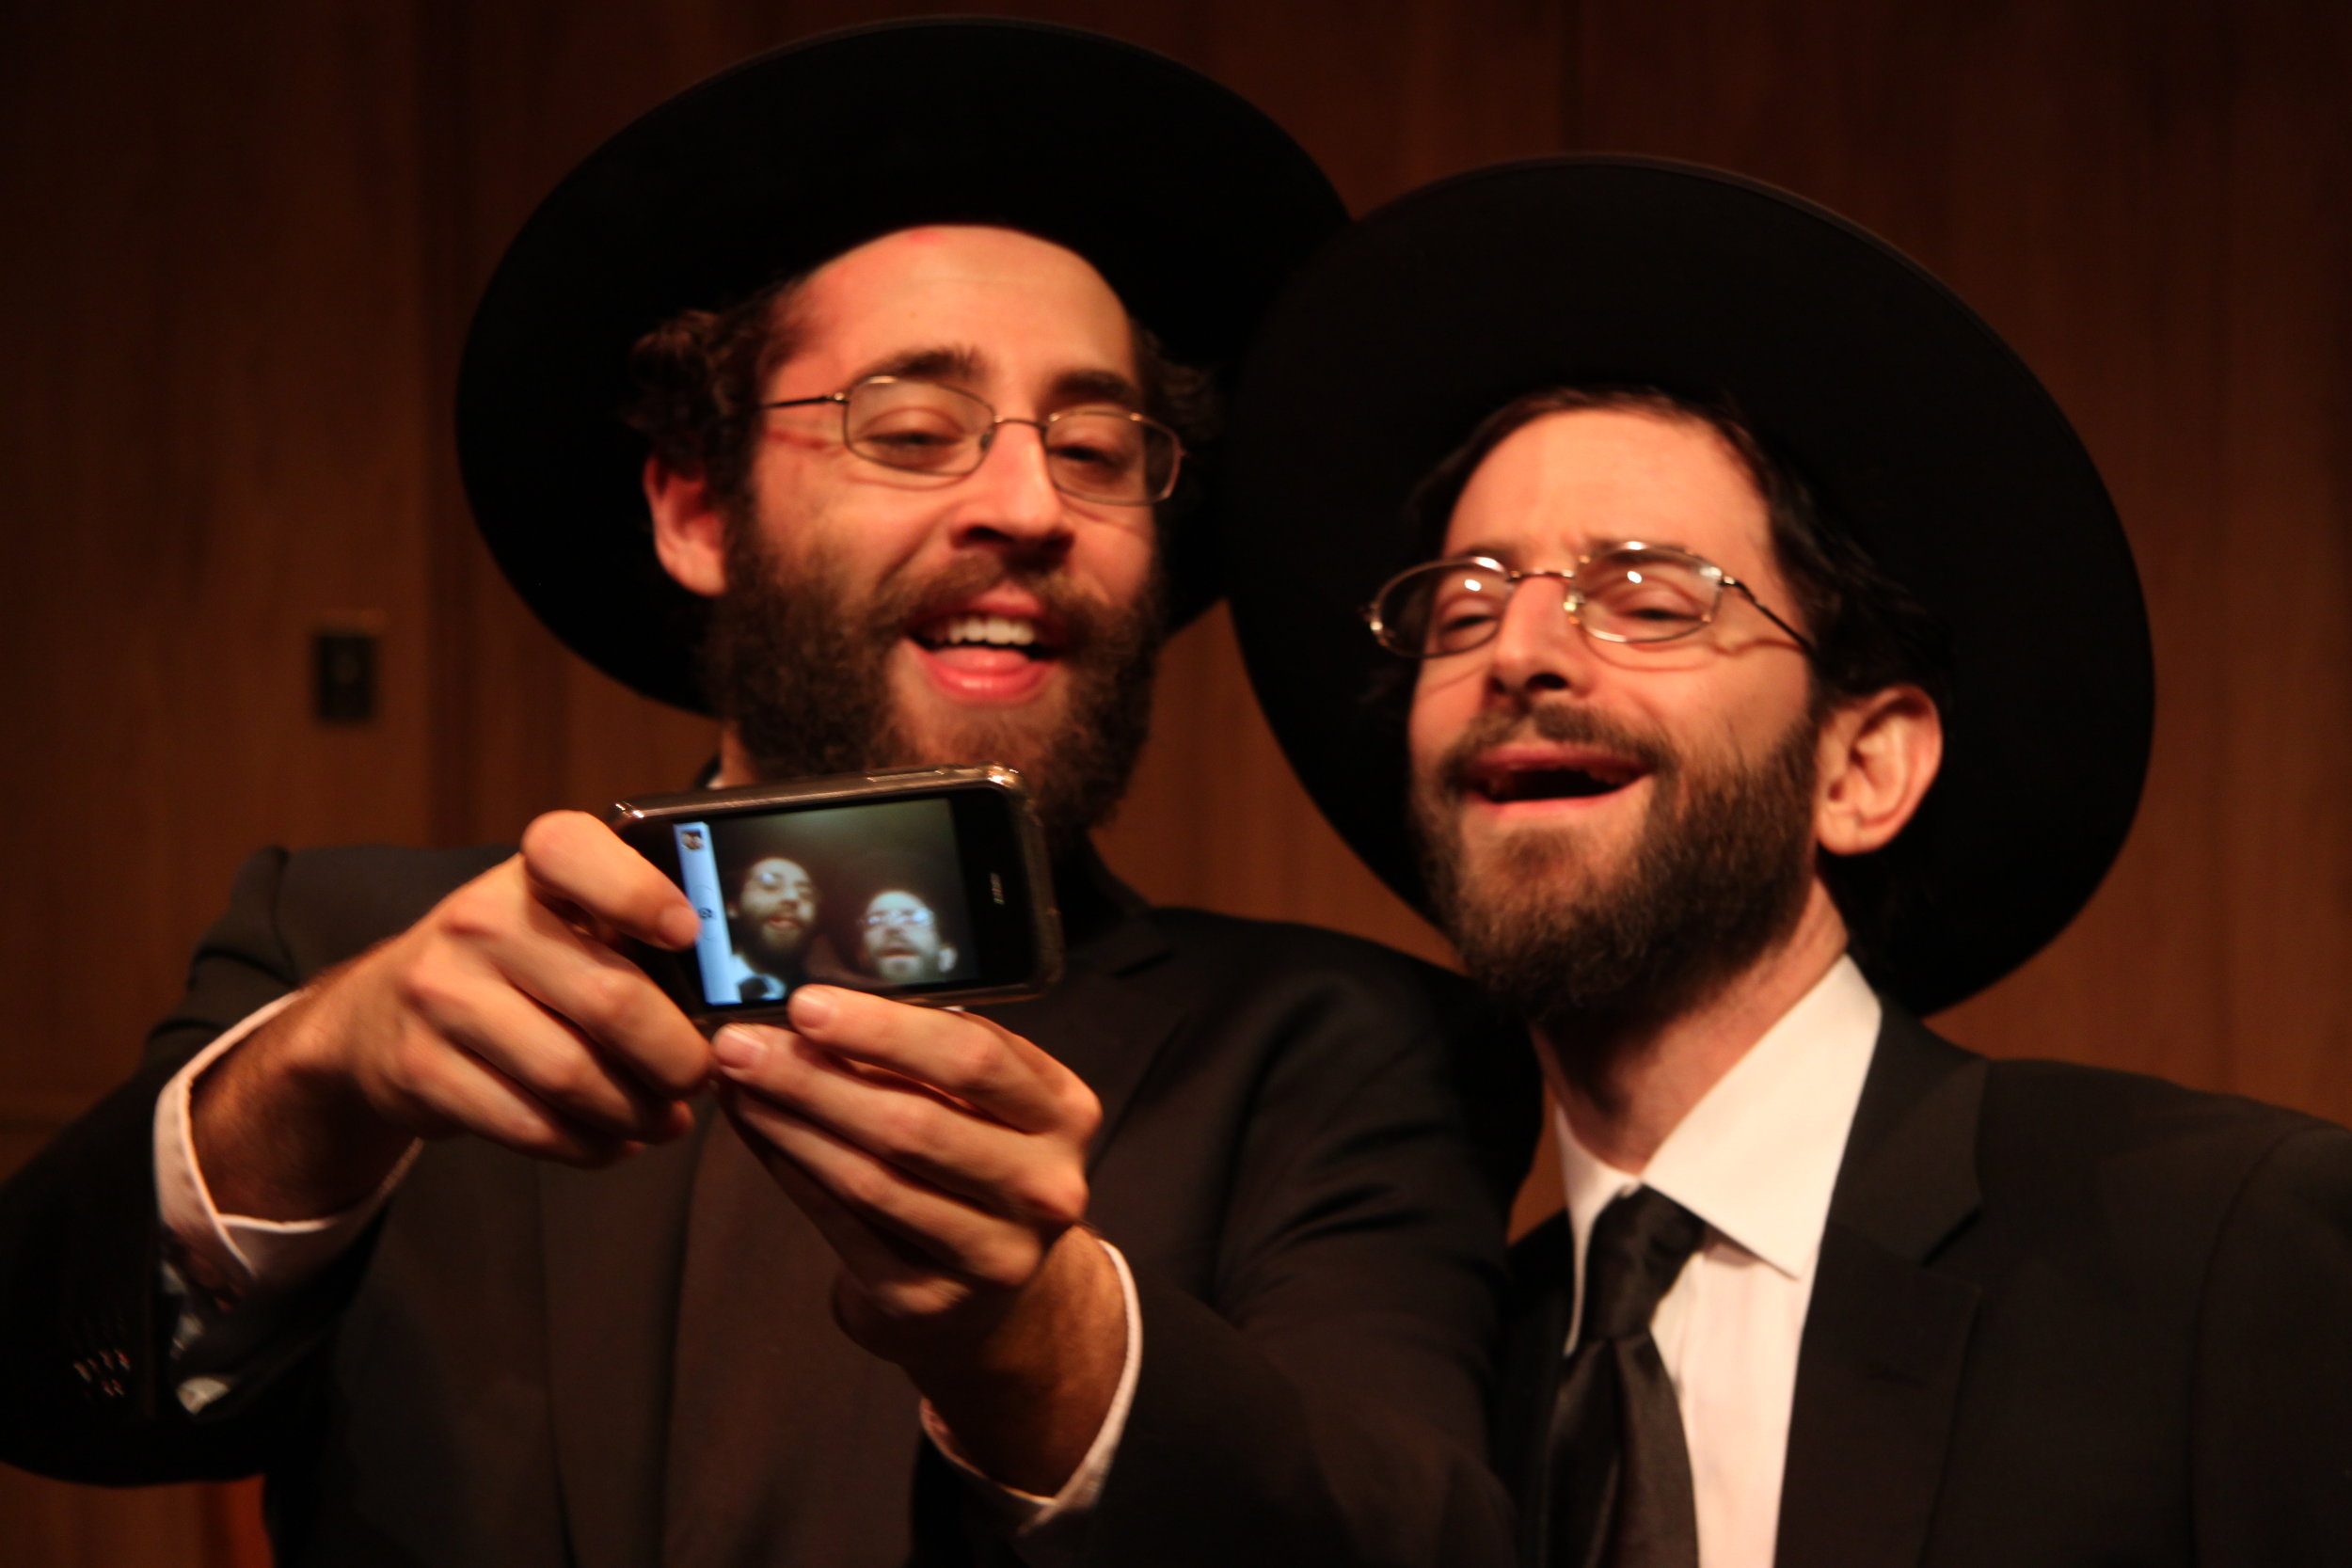  Michael Rubenfeld as Menachem and Jordan Pettle as Ephraim in YICHUD (Seclusion) 